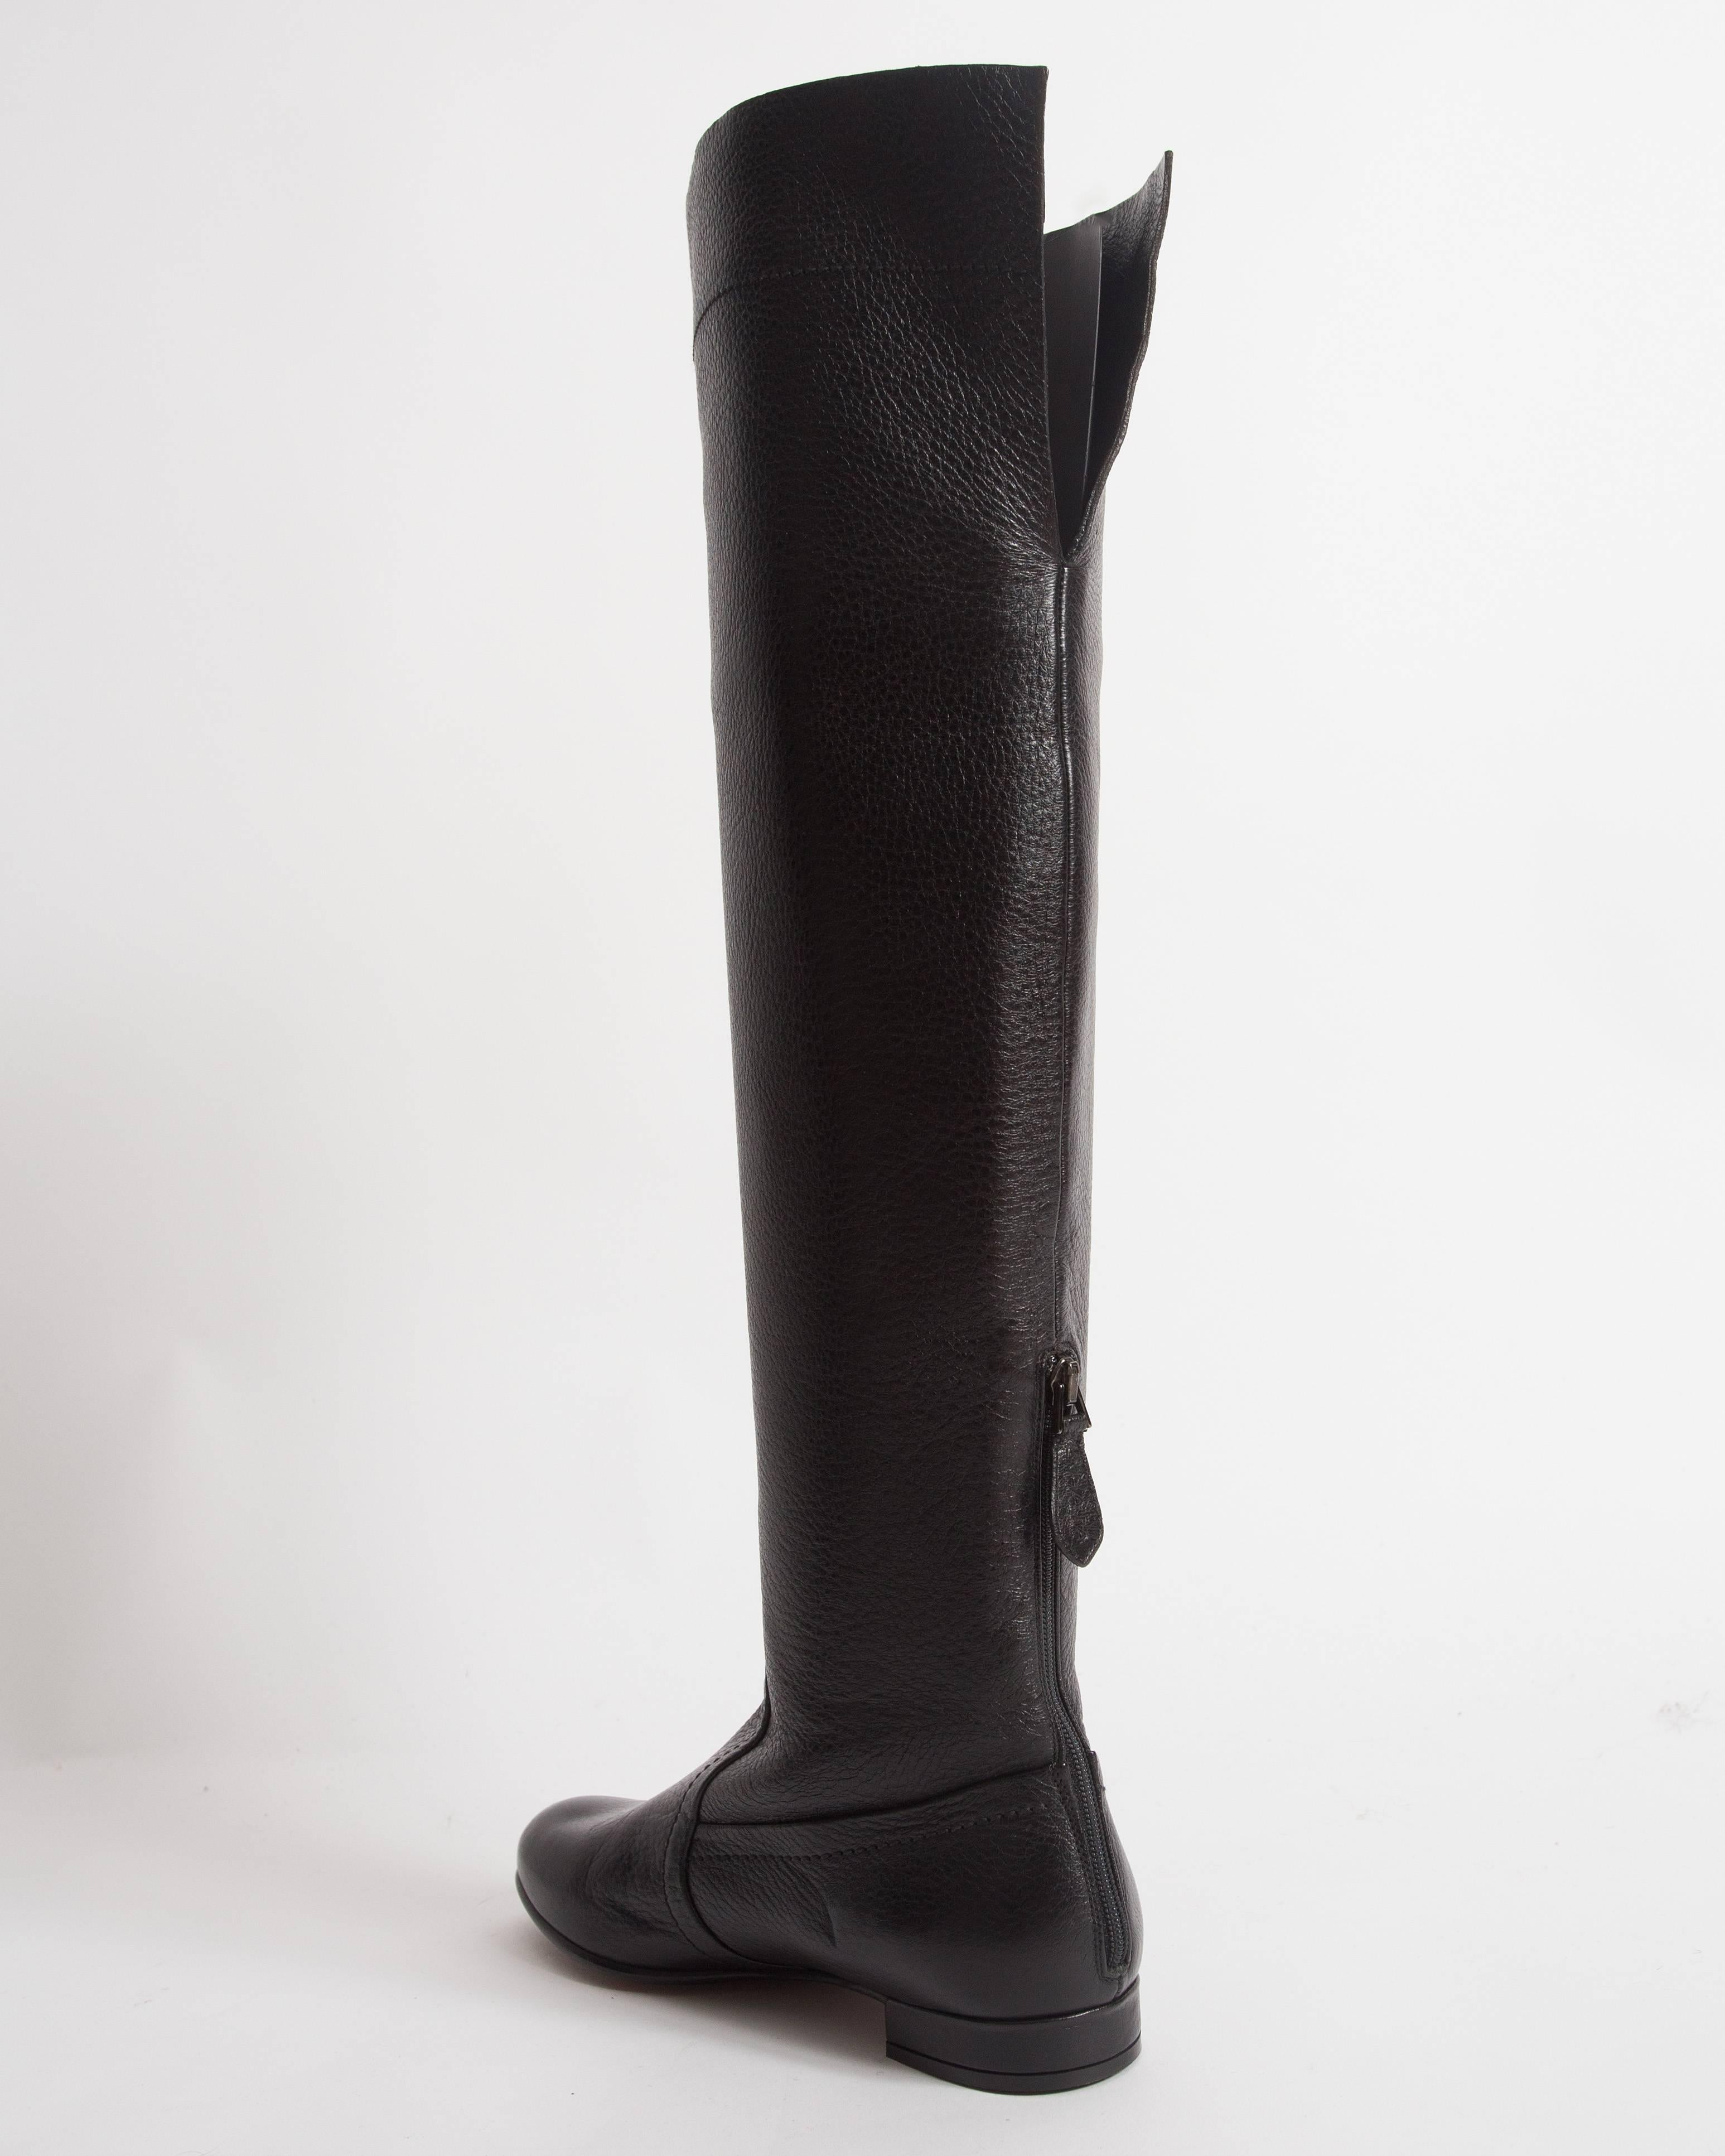 Black Alaia black leather riding boots, size 37.5